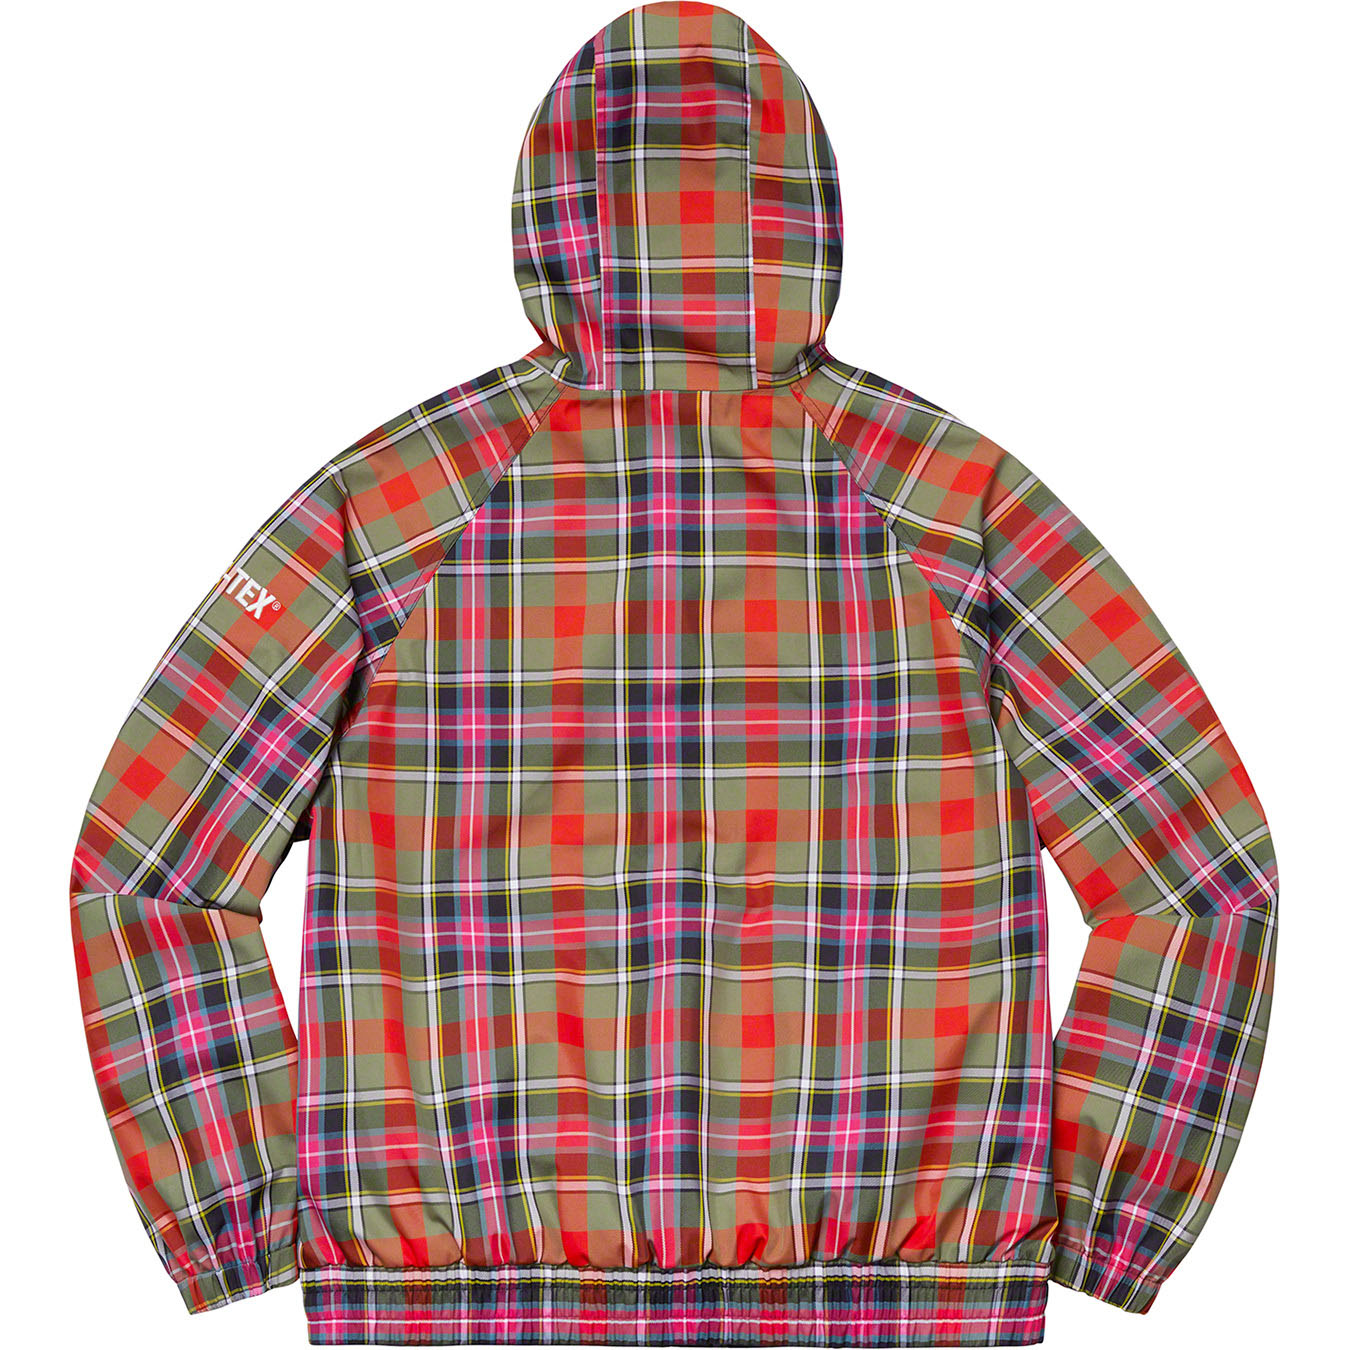 Supreme GORE-TEX Hooded Harrington Jacket